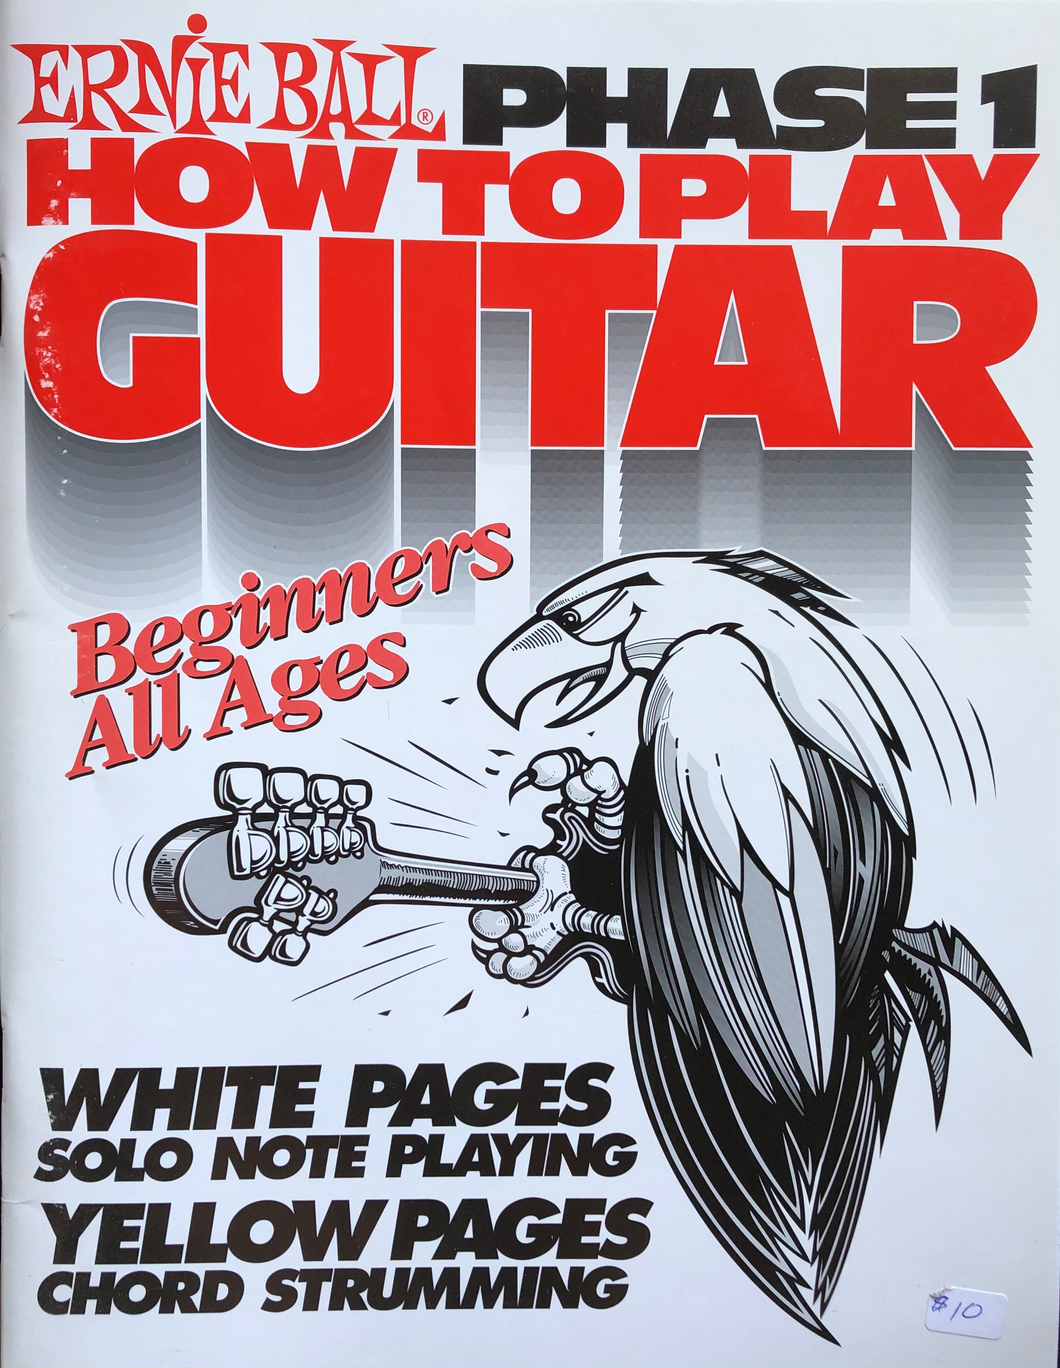 Ernie Ball How To Play Guitar